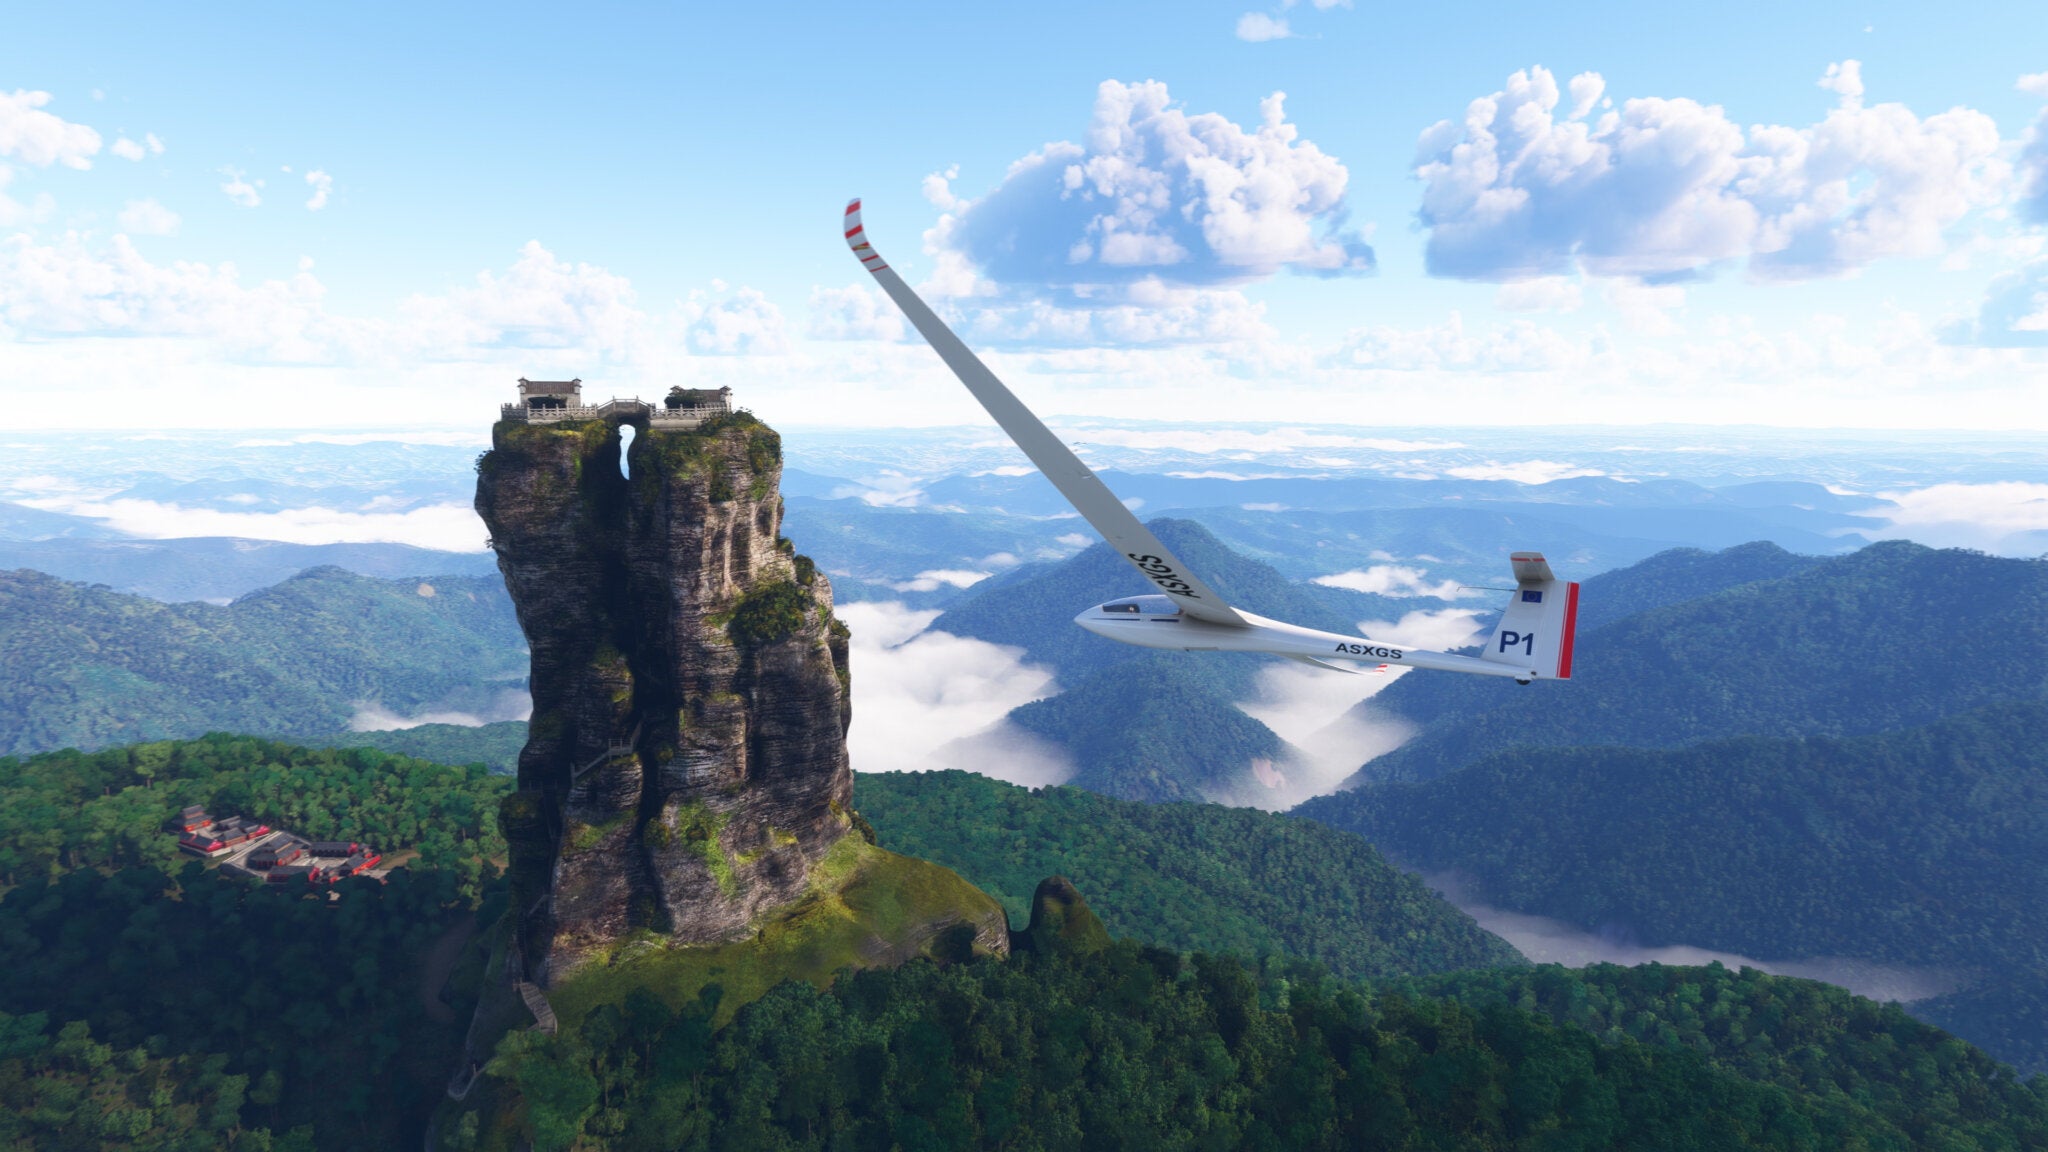 Microsoft Flight Simulator 2024 Announcement!!!